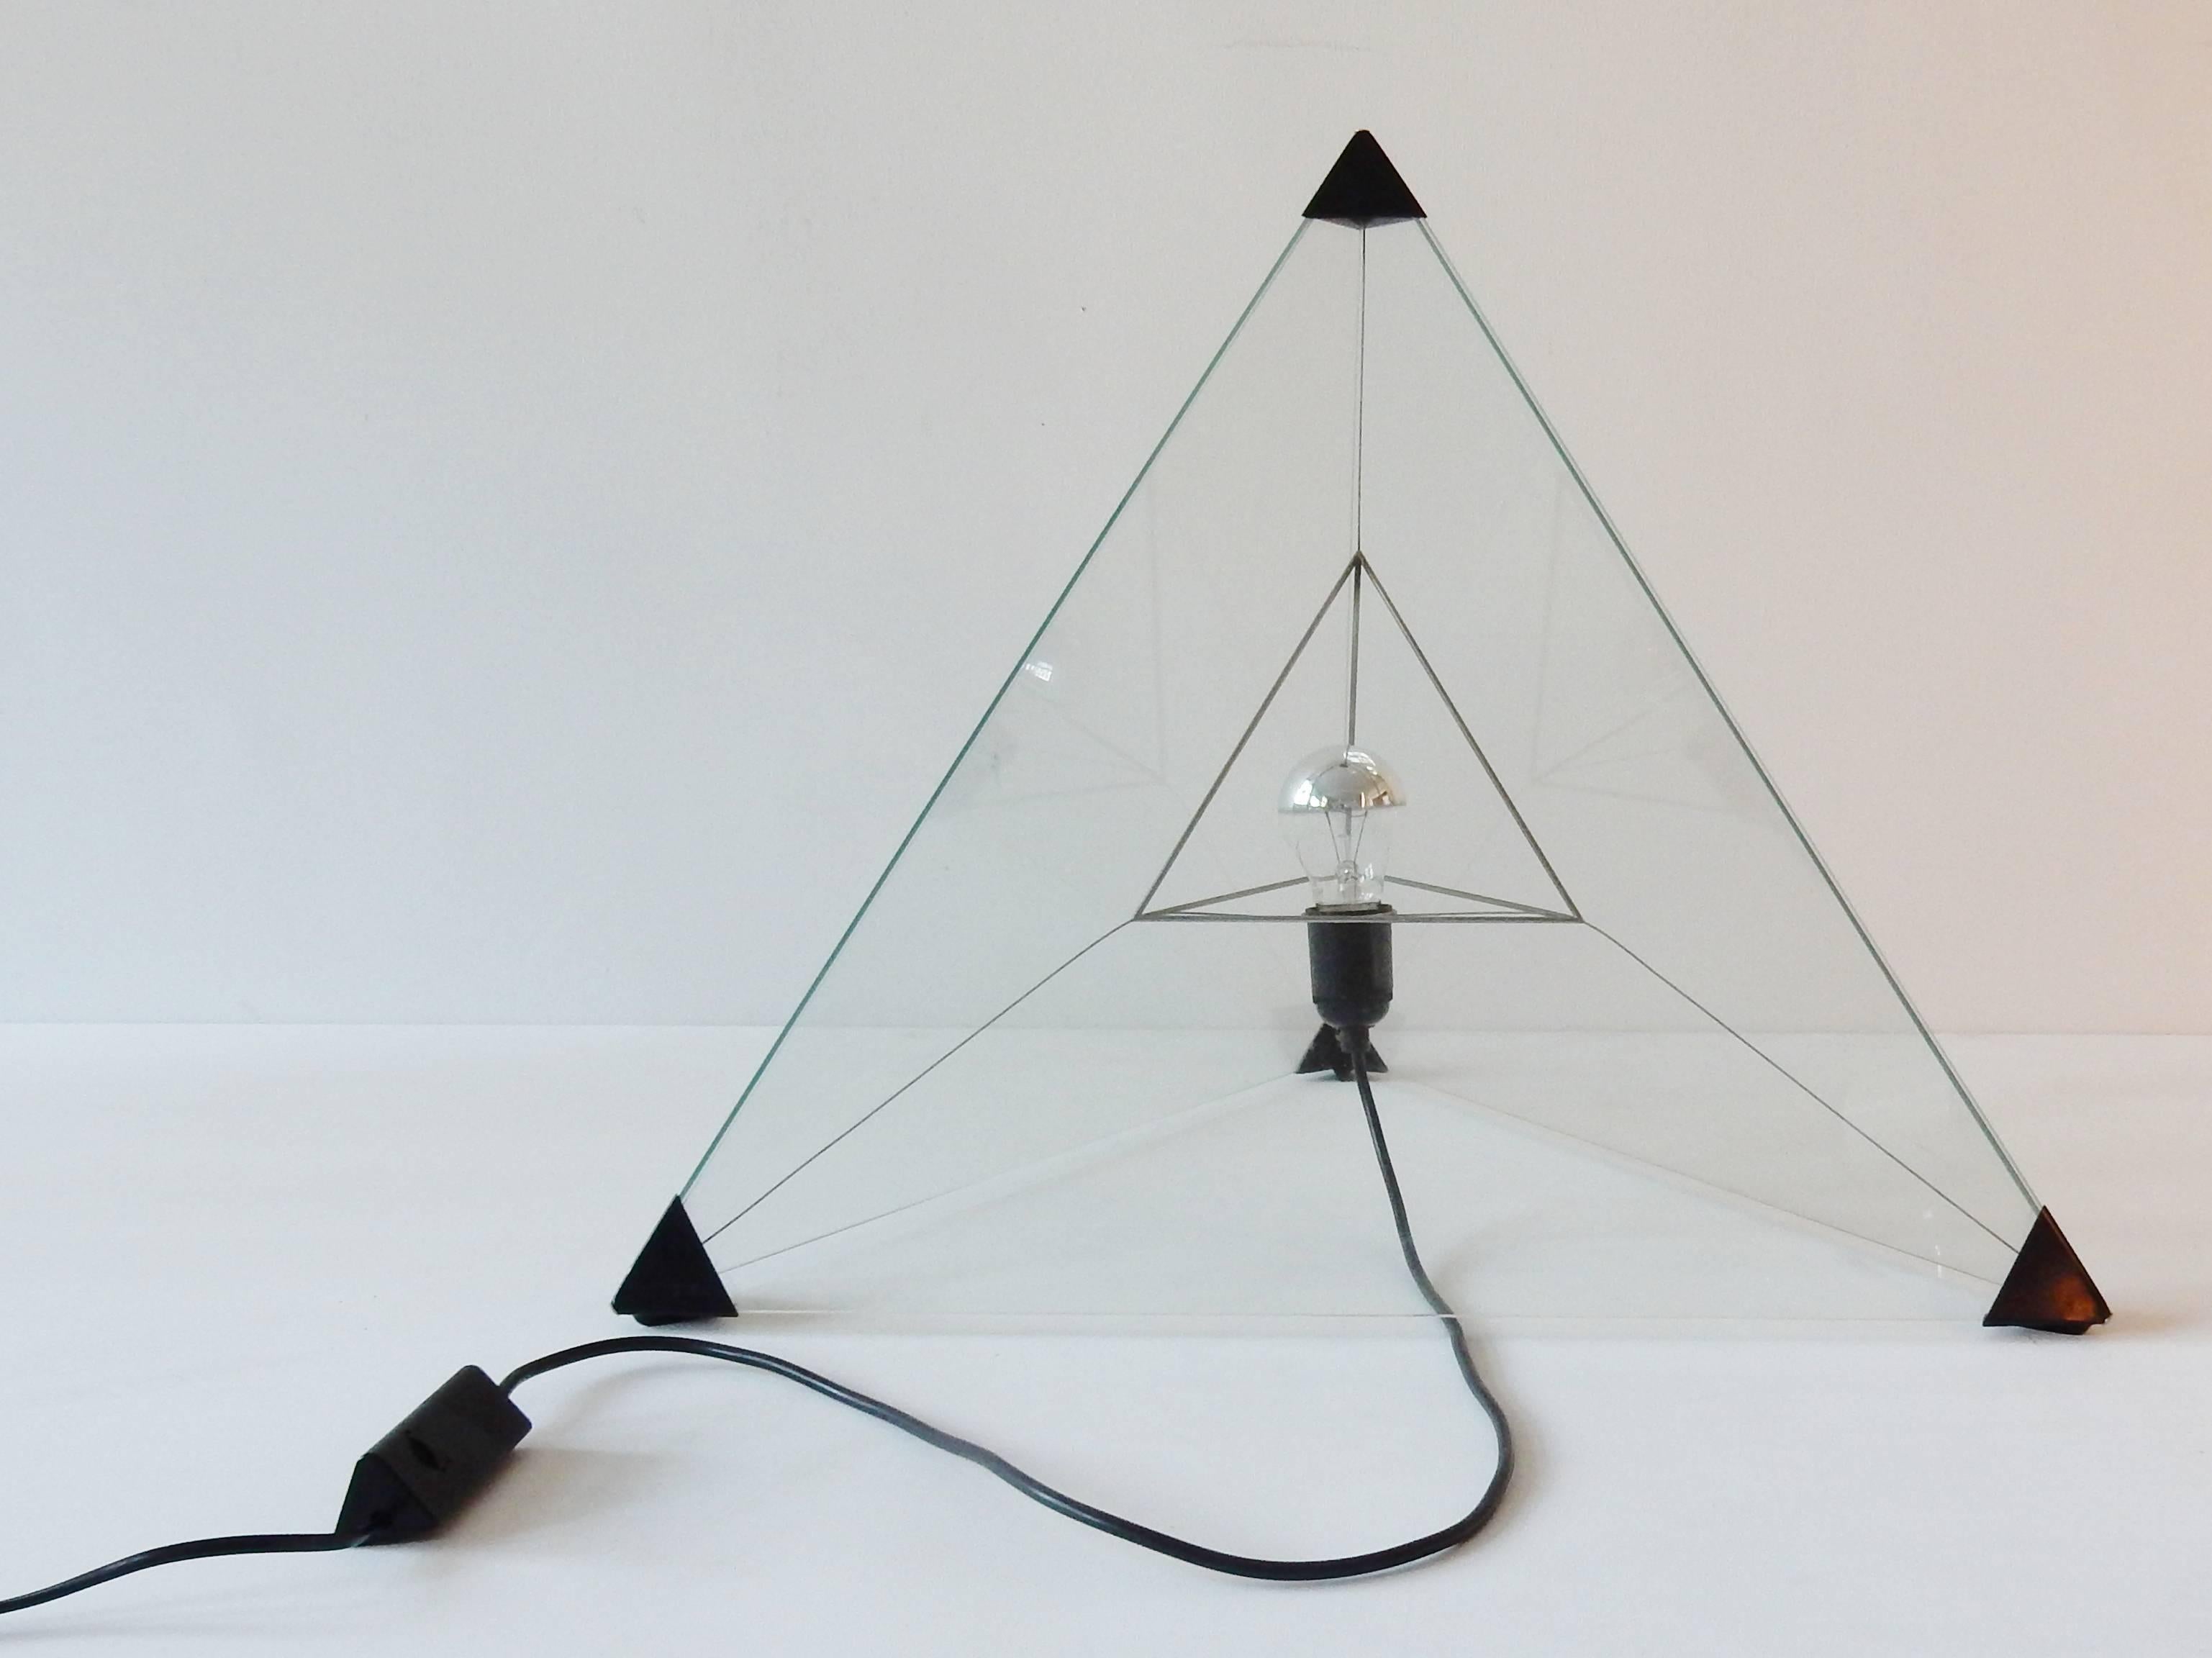 Modern 'Tetrahedron' Table or Floor Lamp, Dutch Design, 1970s For Sale